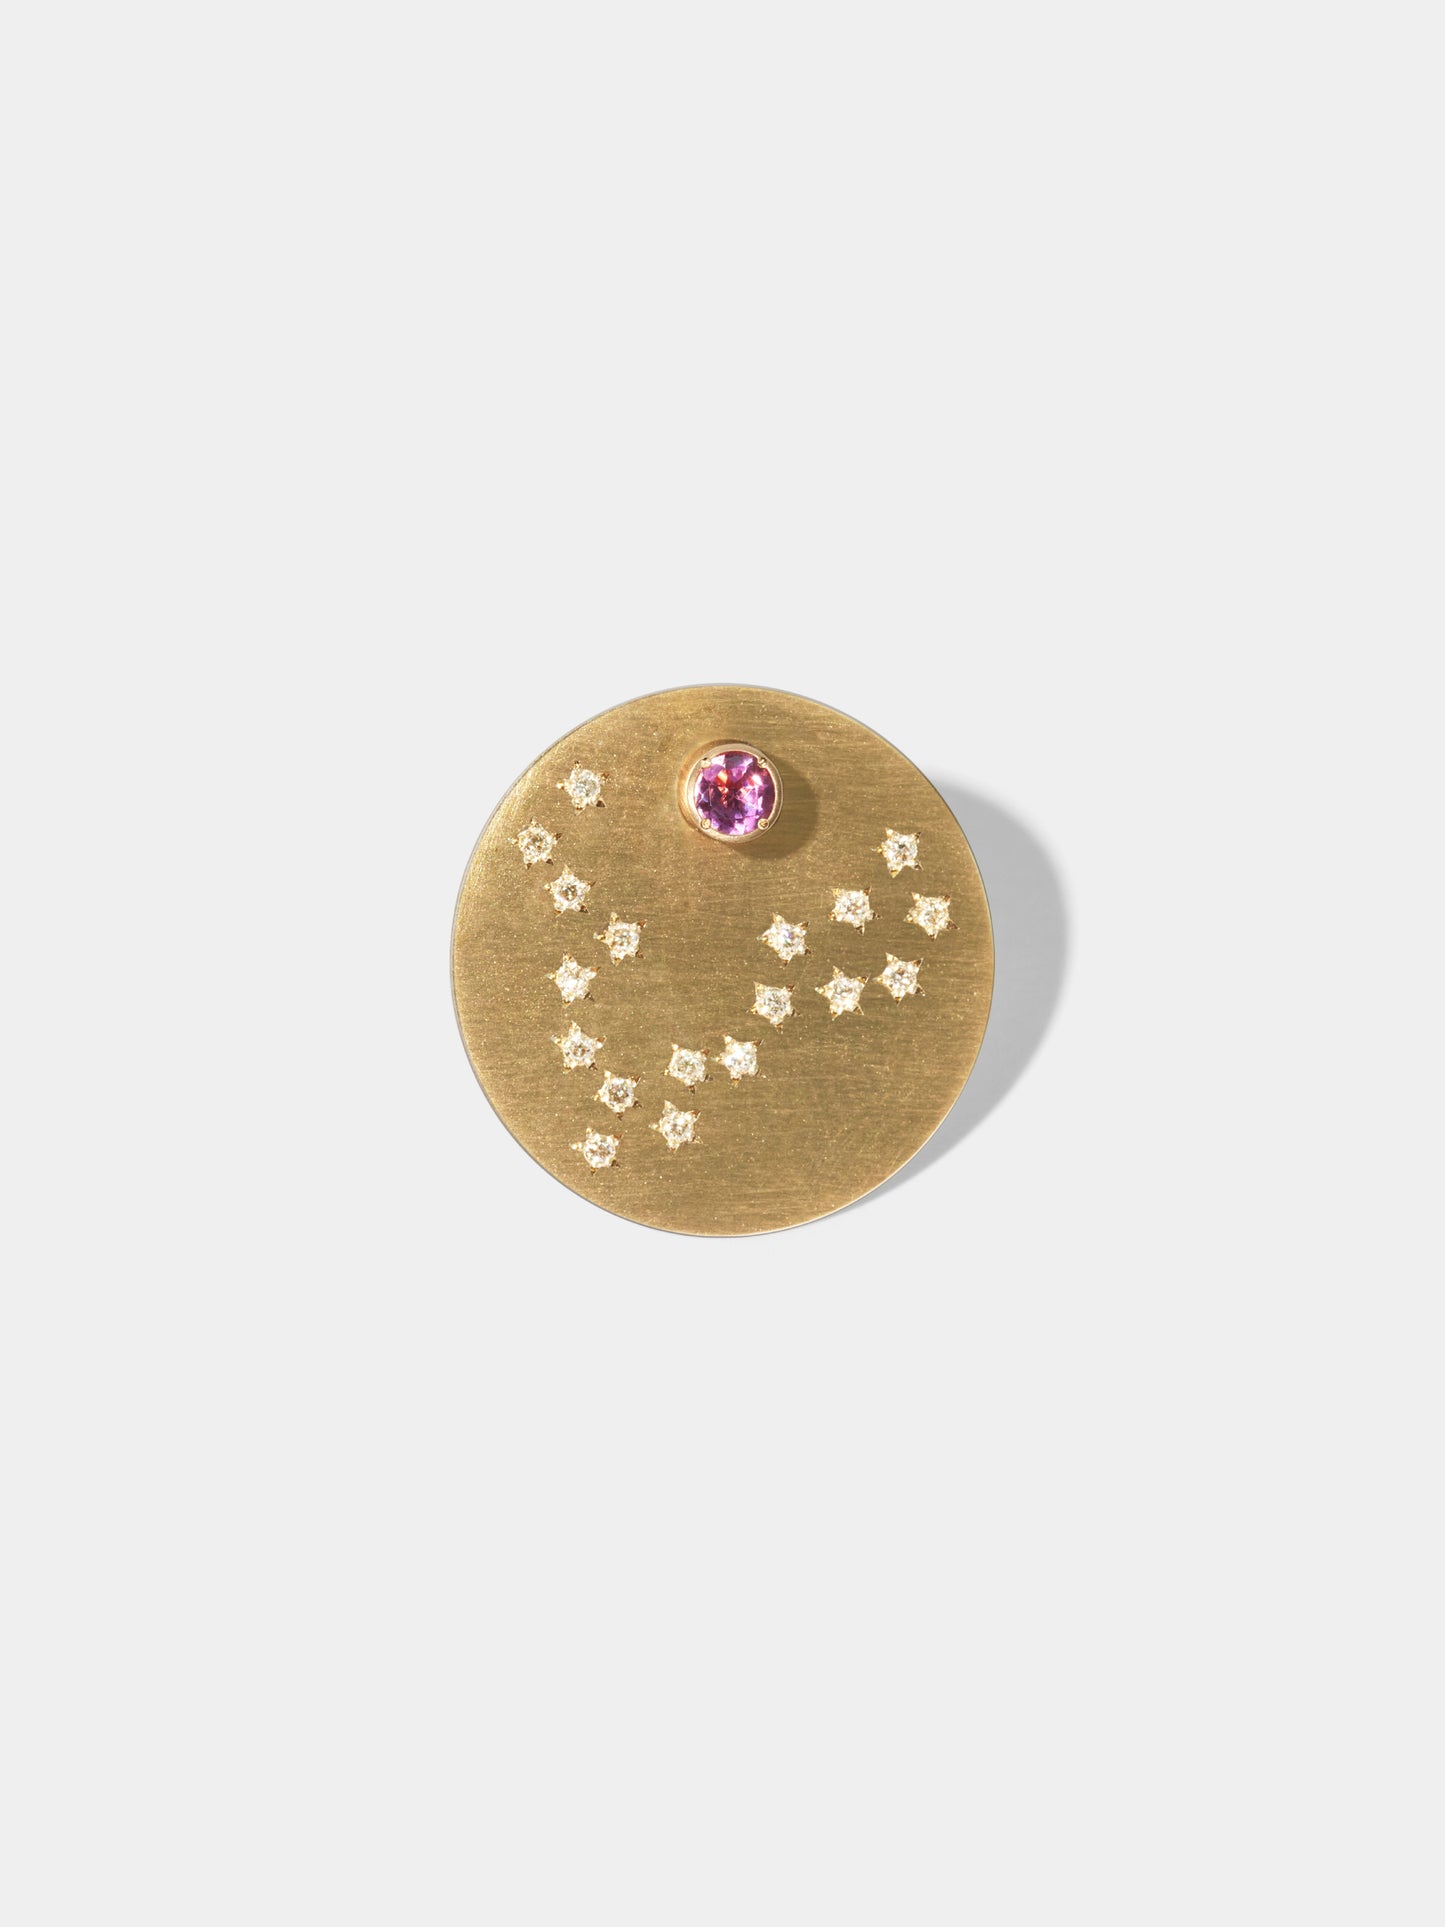 ASTERISM_Pierced Earring_Pisces(魚座) / Pink Tourmaline